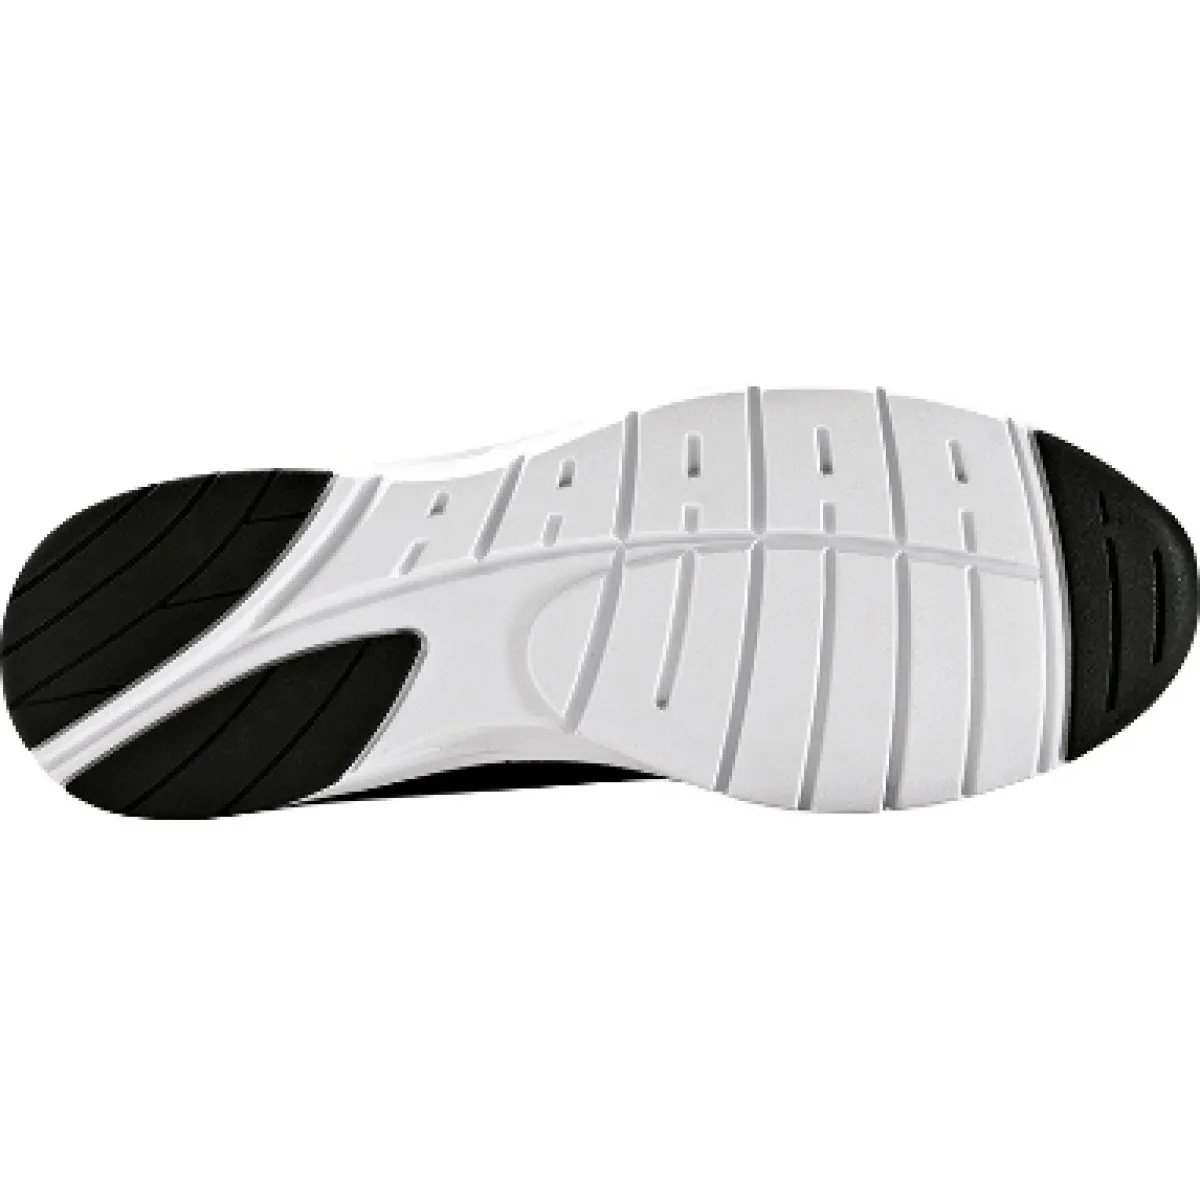 Leisure shoes Striker black with memory foam sole